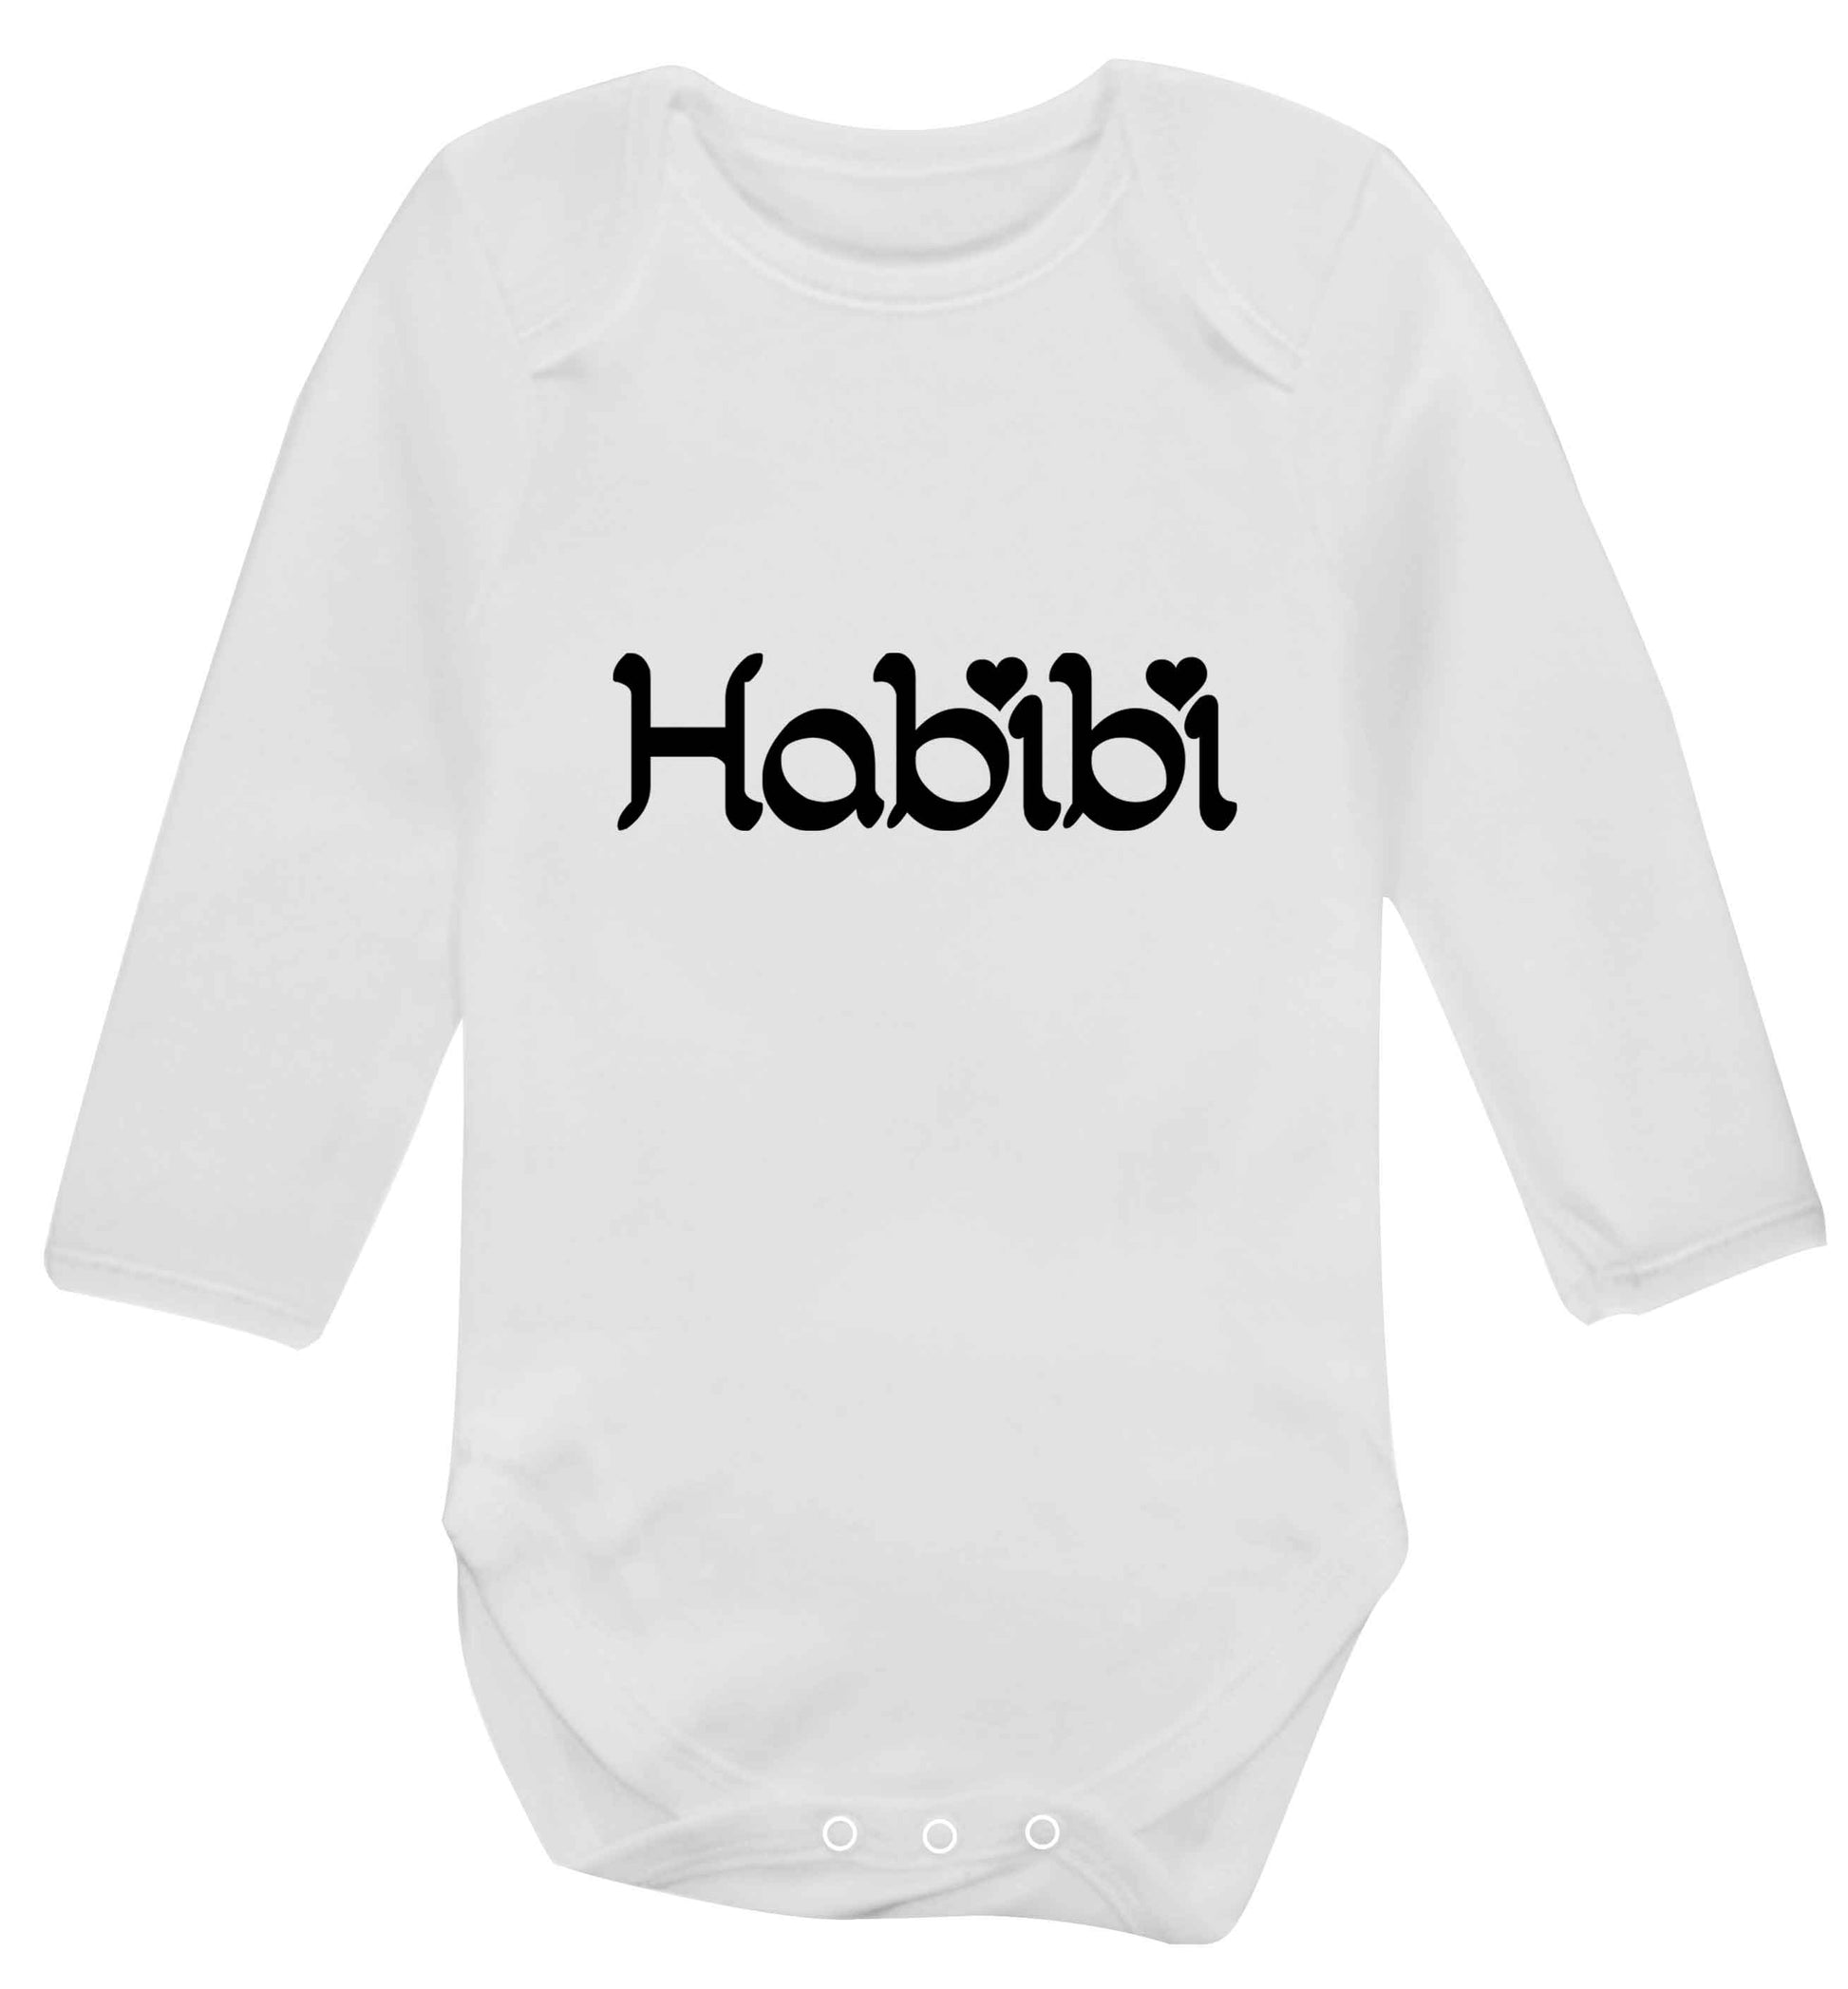 Habibi baby vest long sleeved white 6-12 months